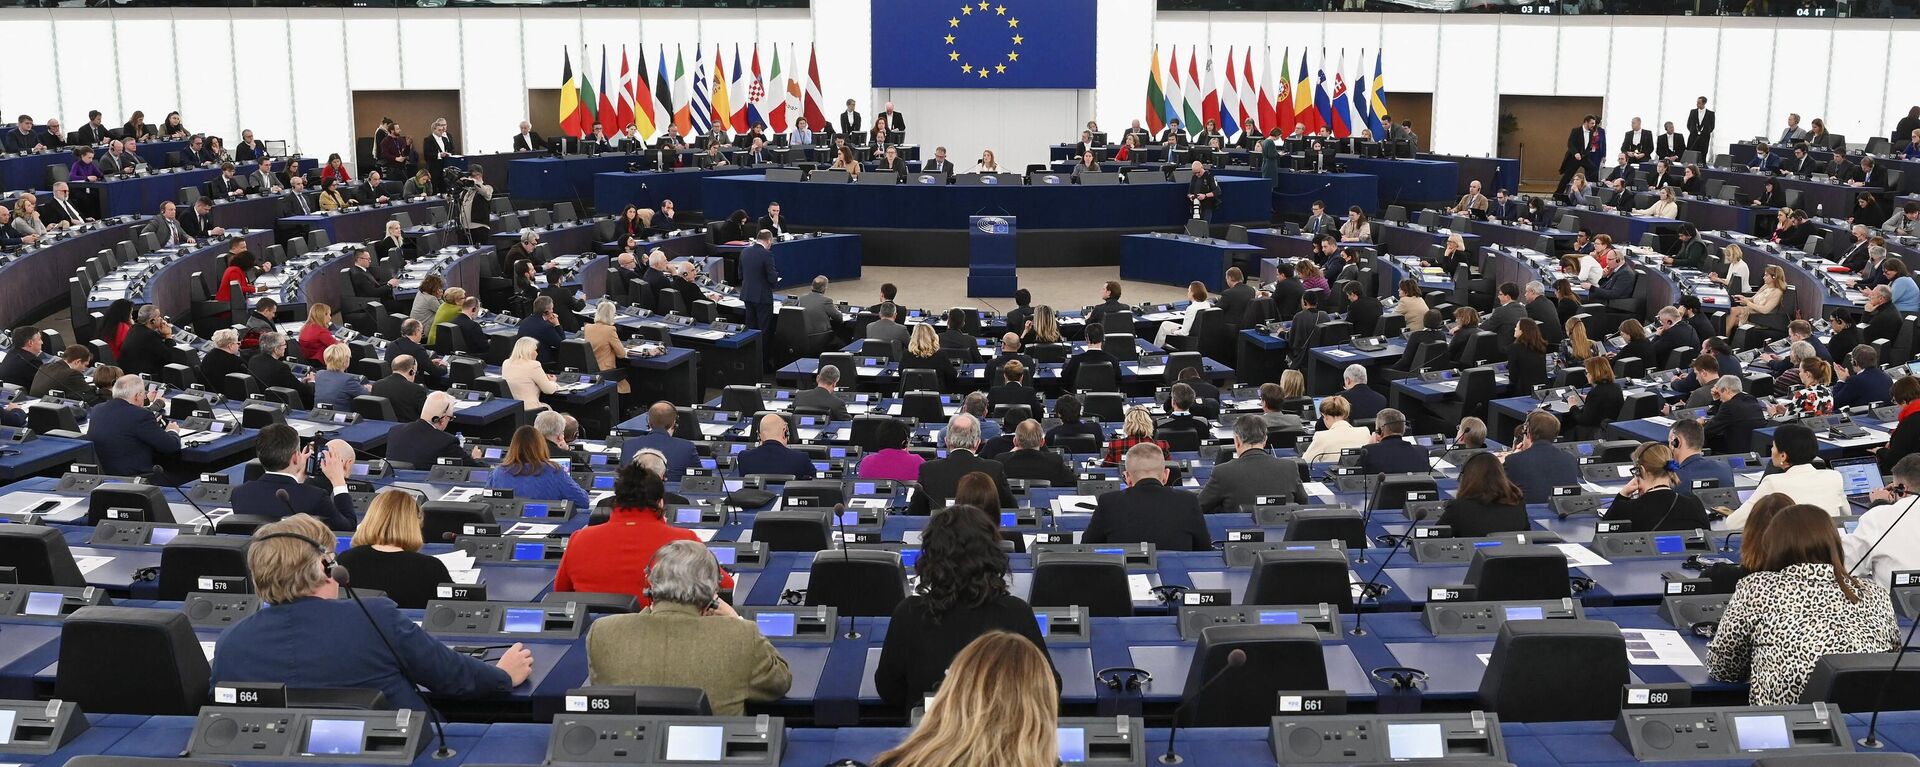 Members of the European Parliament attend the opening session of the European Parliament in Strasbourg, eastern France, on December 12, 2022.  - Sputnik International, 1920, 01.02.2023